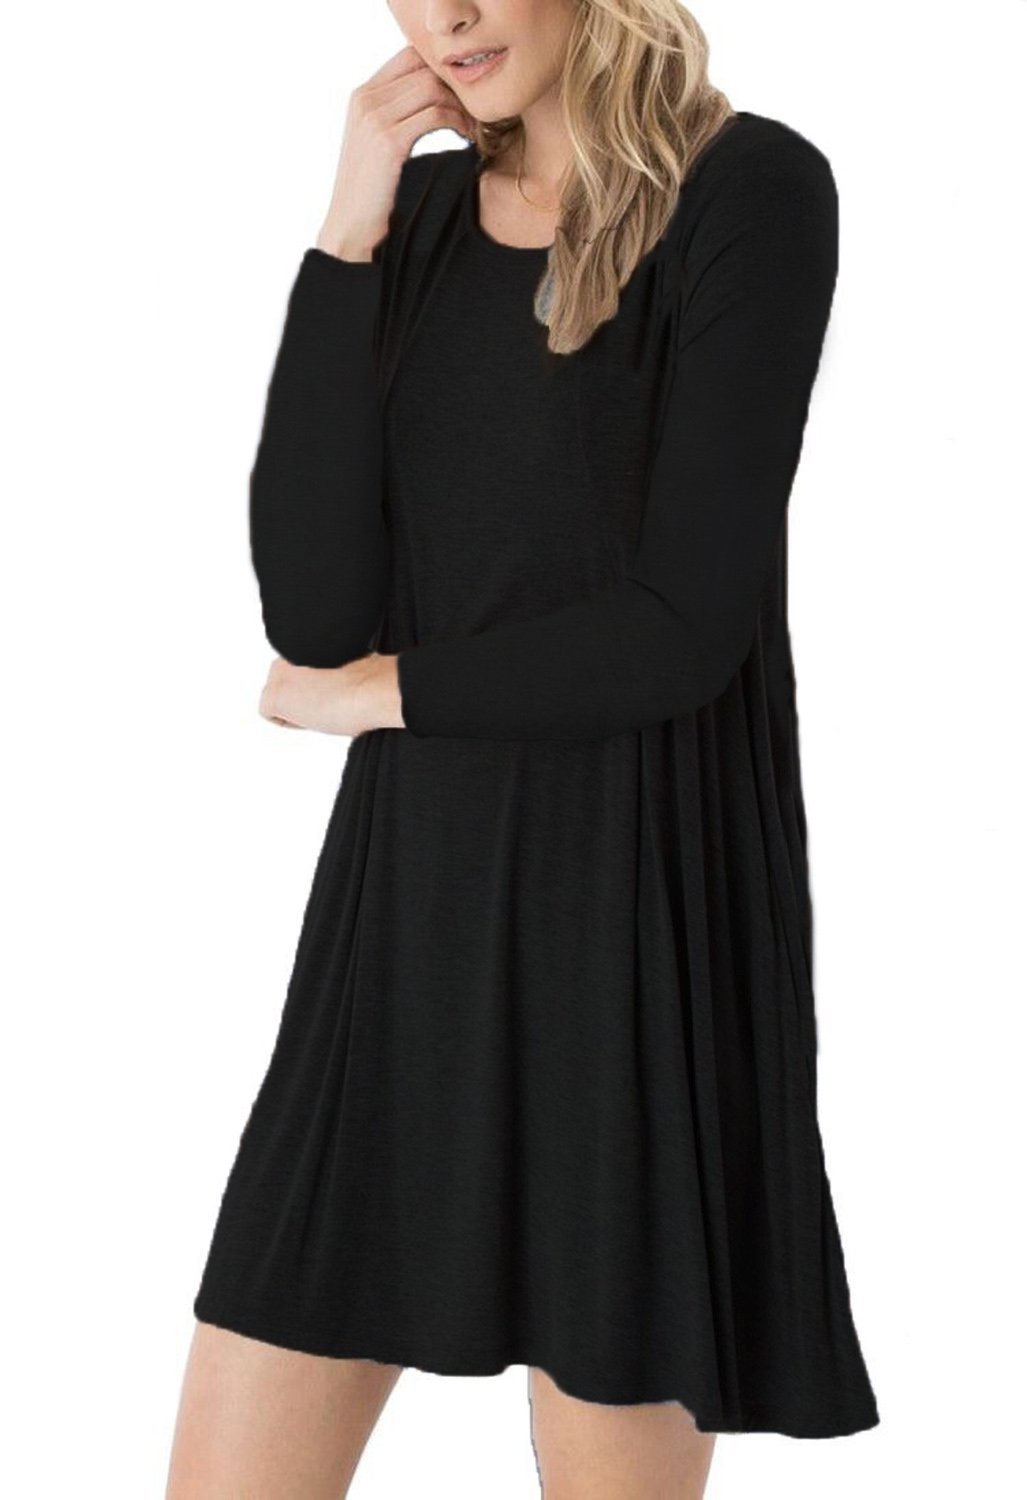 DEARCASE Women's Long Sleeve Casual Loose T-Shirt Dress Black S